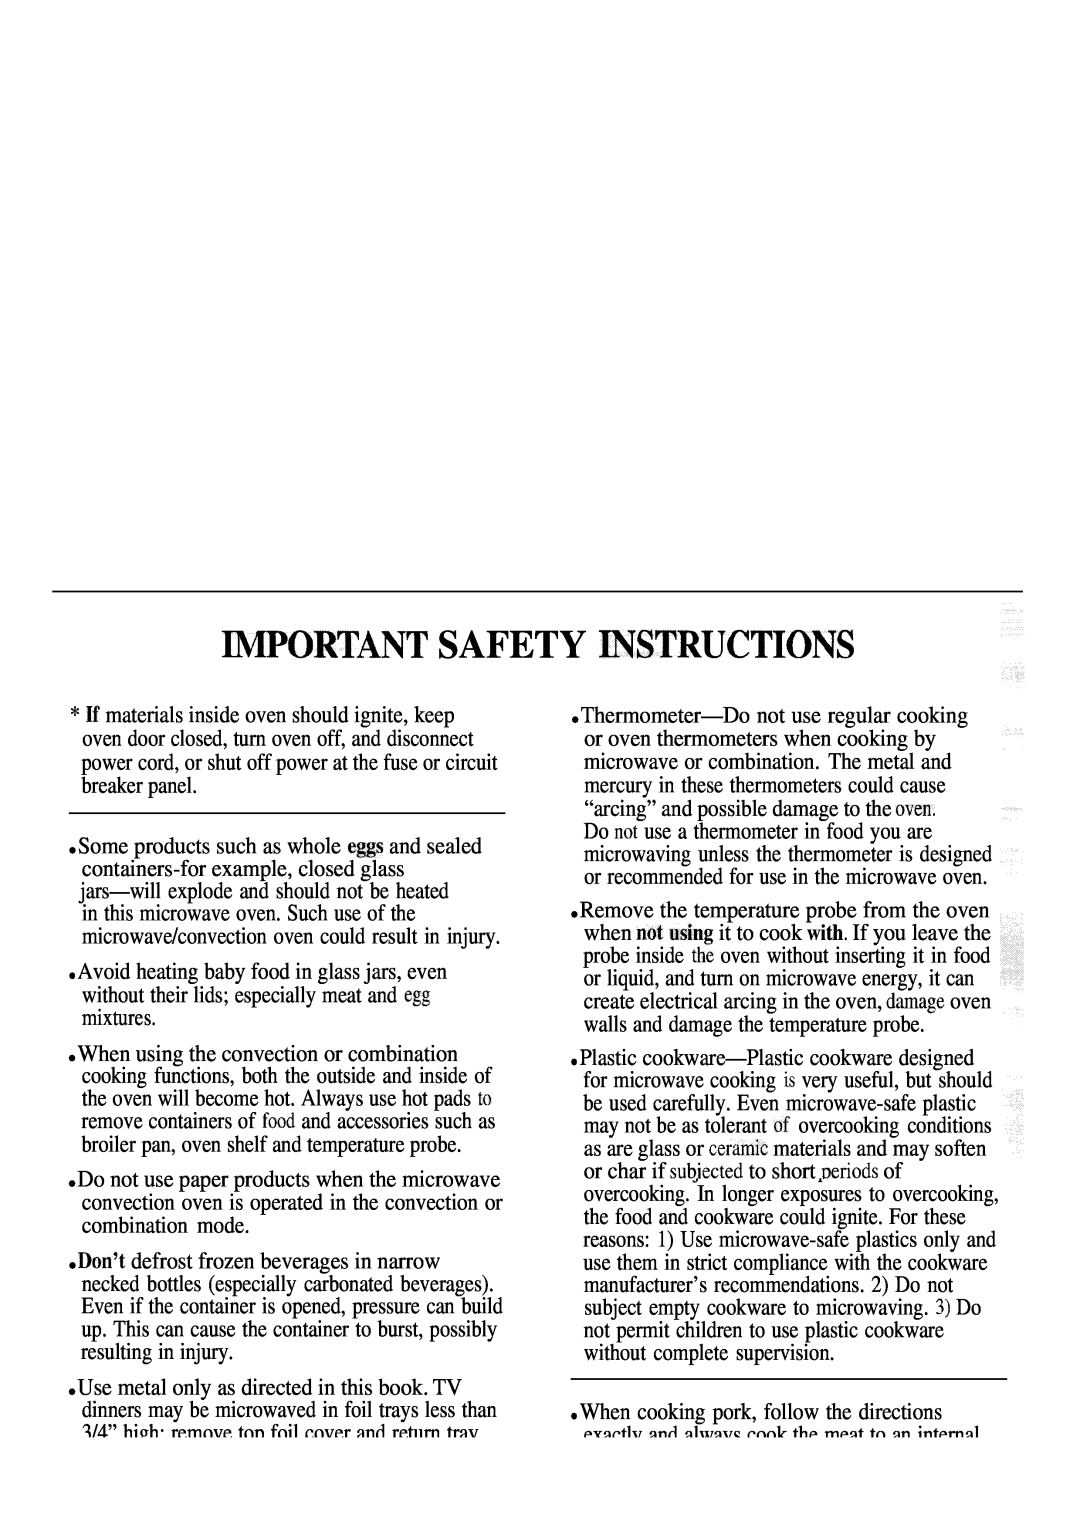 GE Monogram JET343G manual Wportant Safety ~Structions 